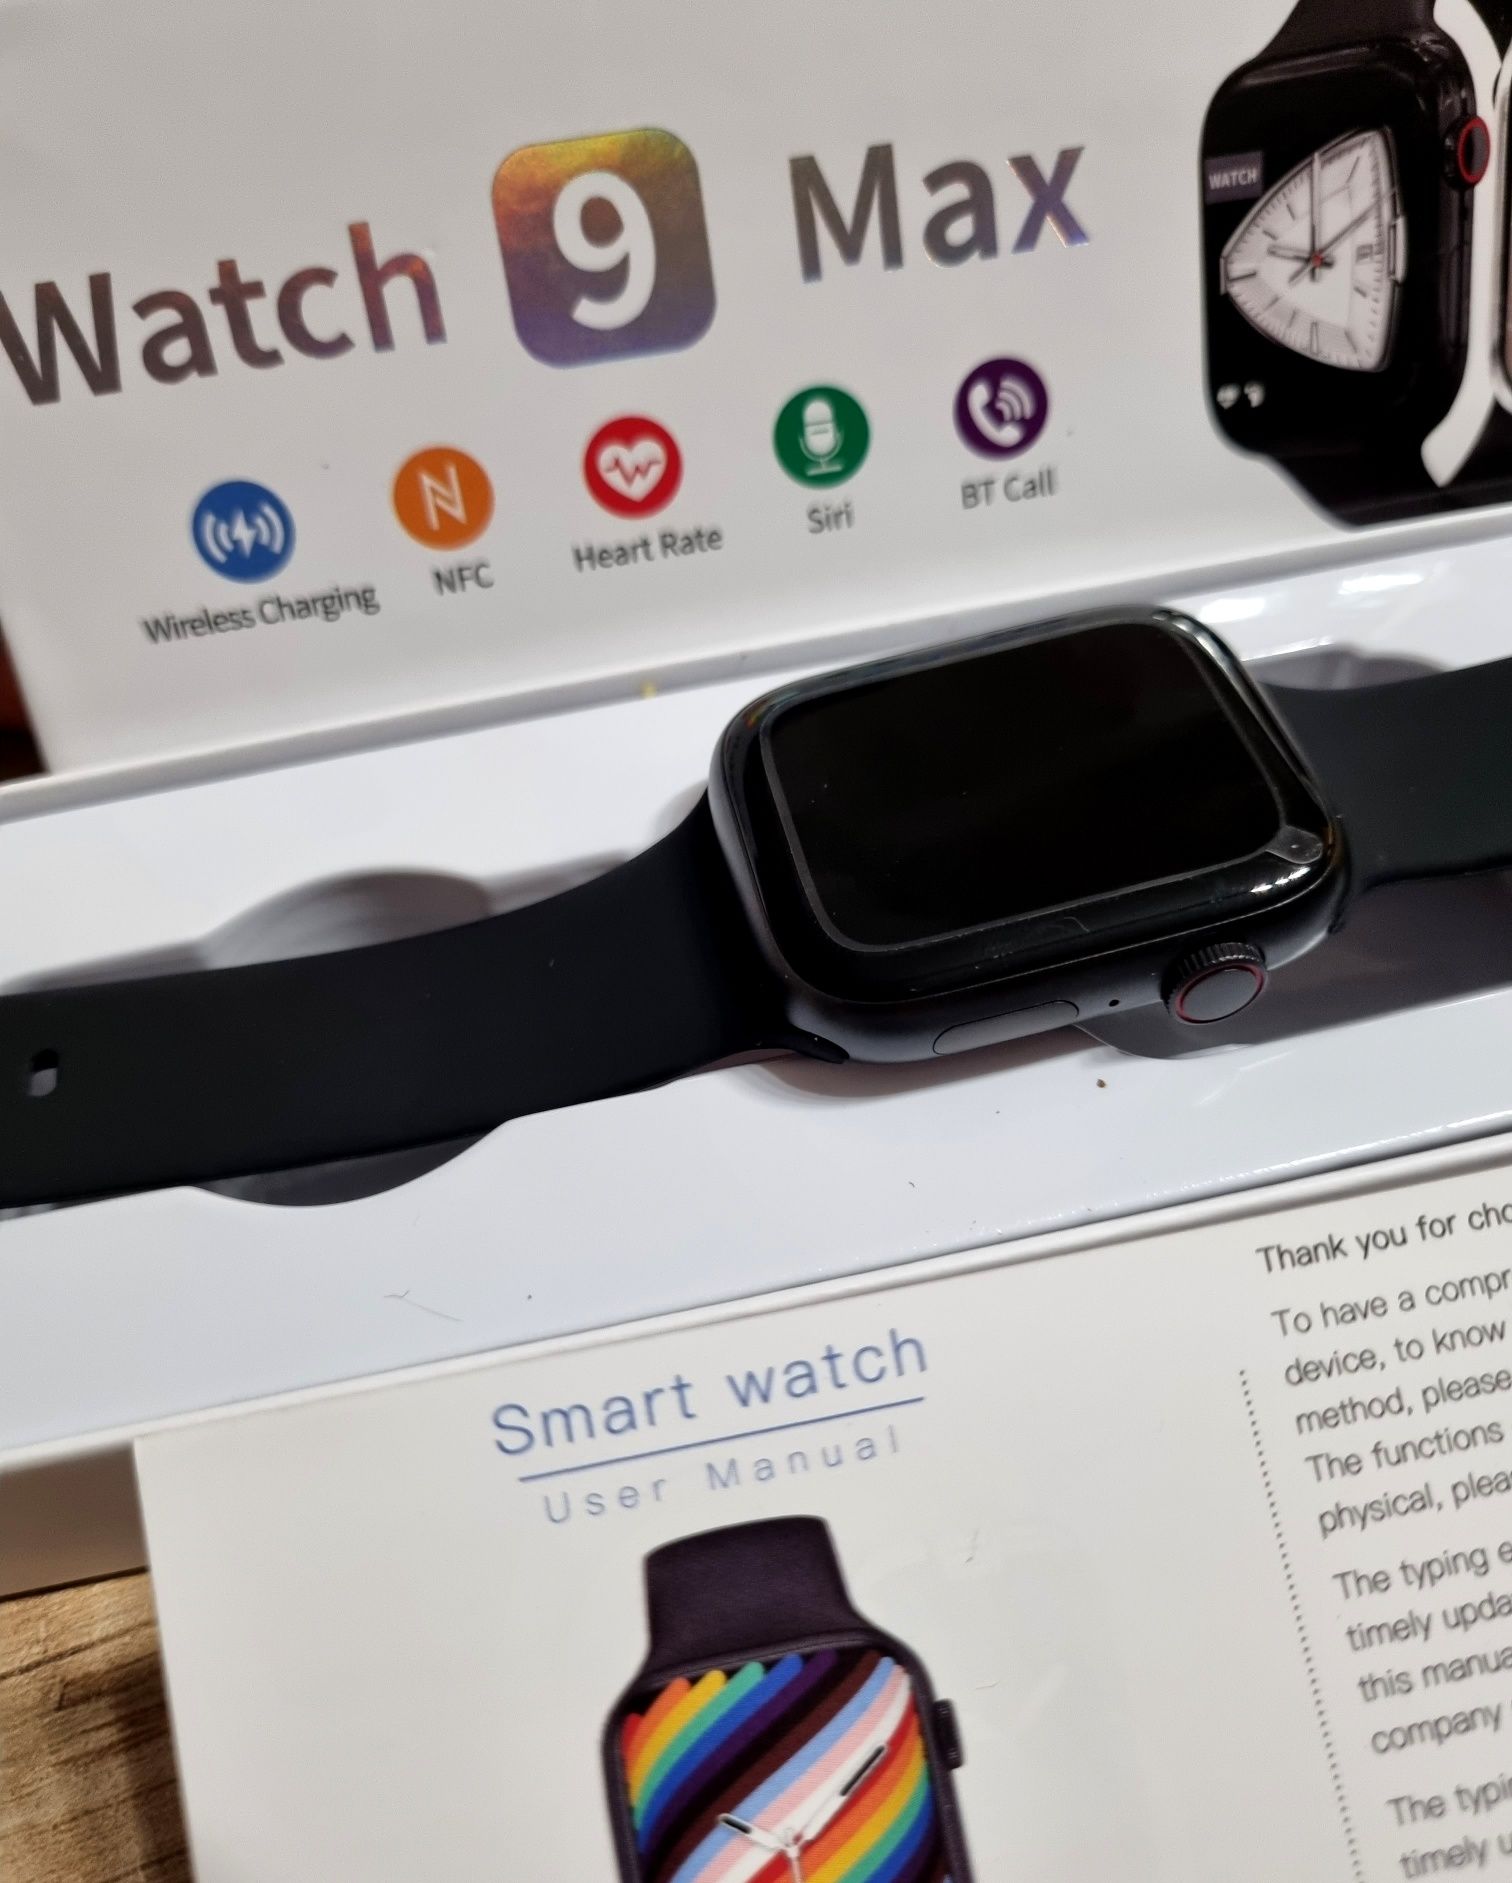 Smartwatch S9 Max